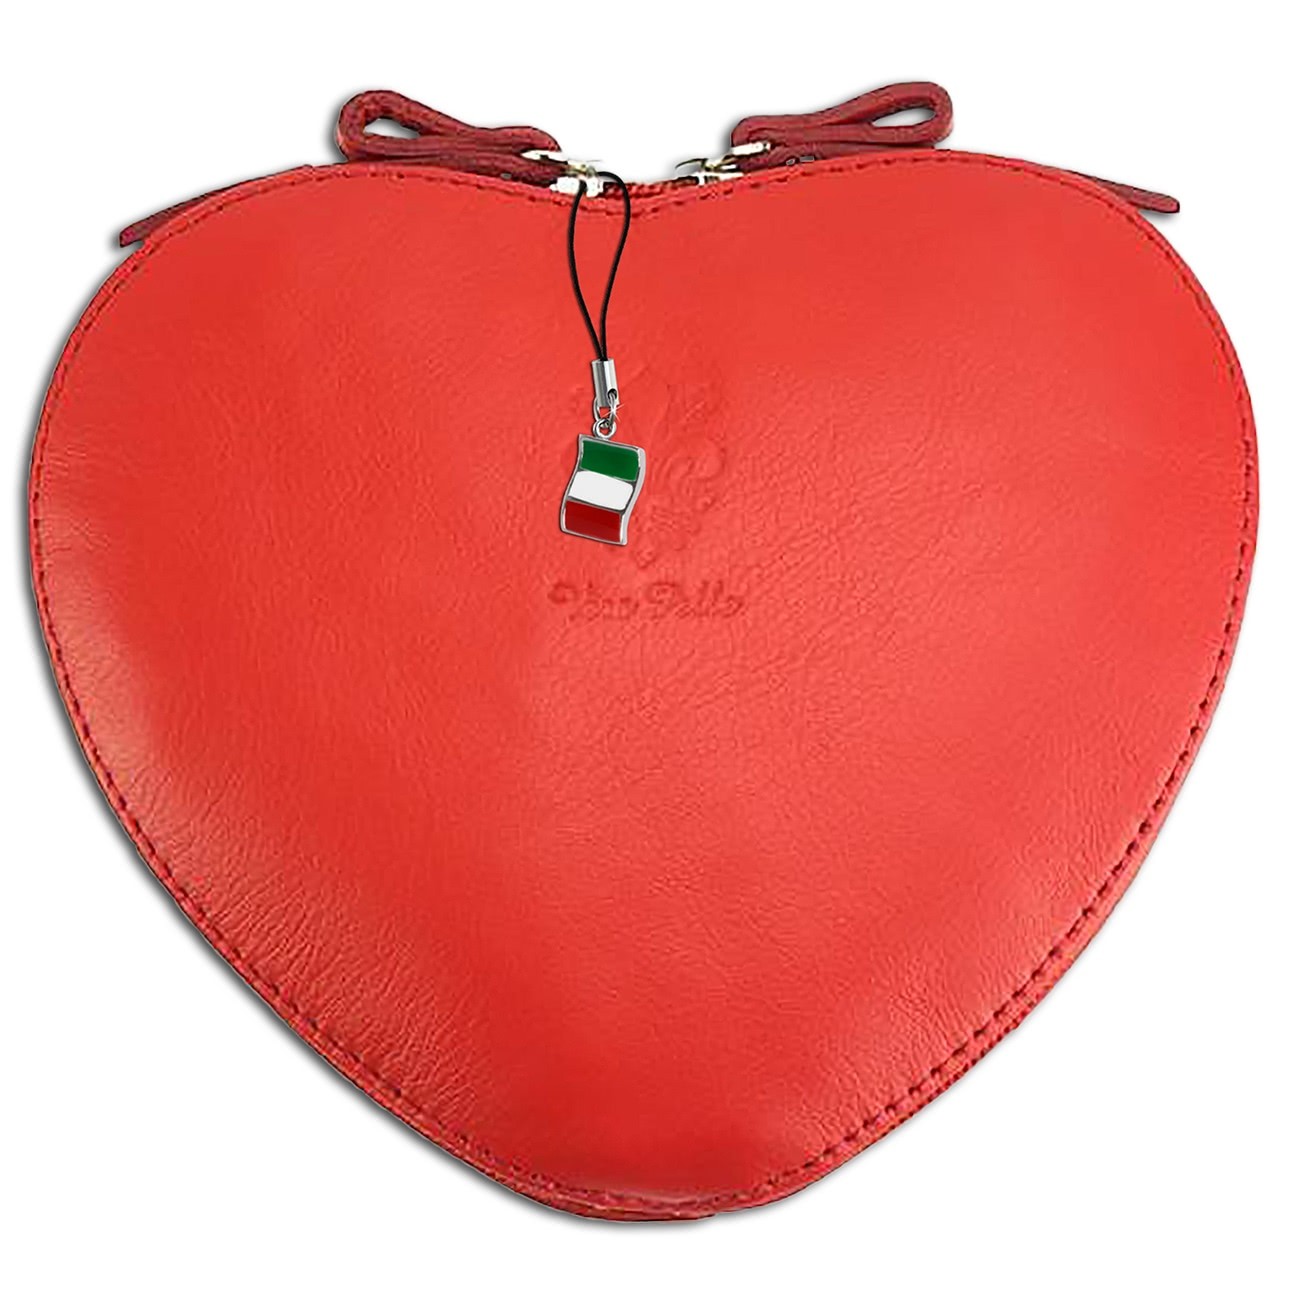 Florence herzförmige Damen Schultertasche echtes Leder Handtasche rot OTF121R